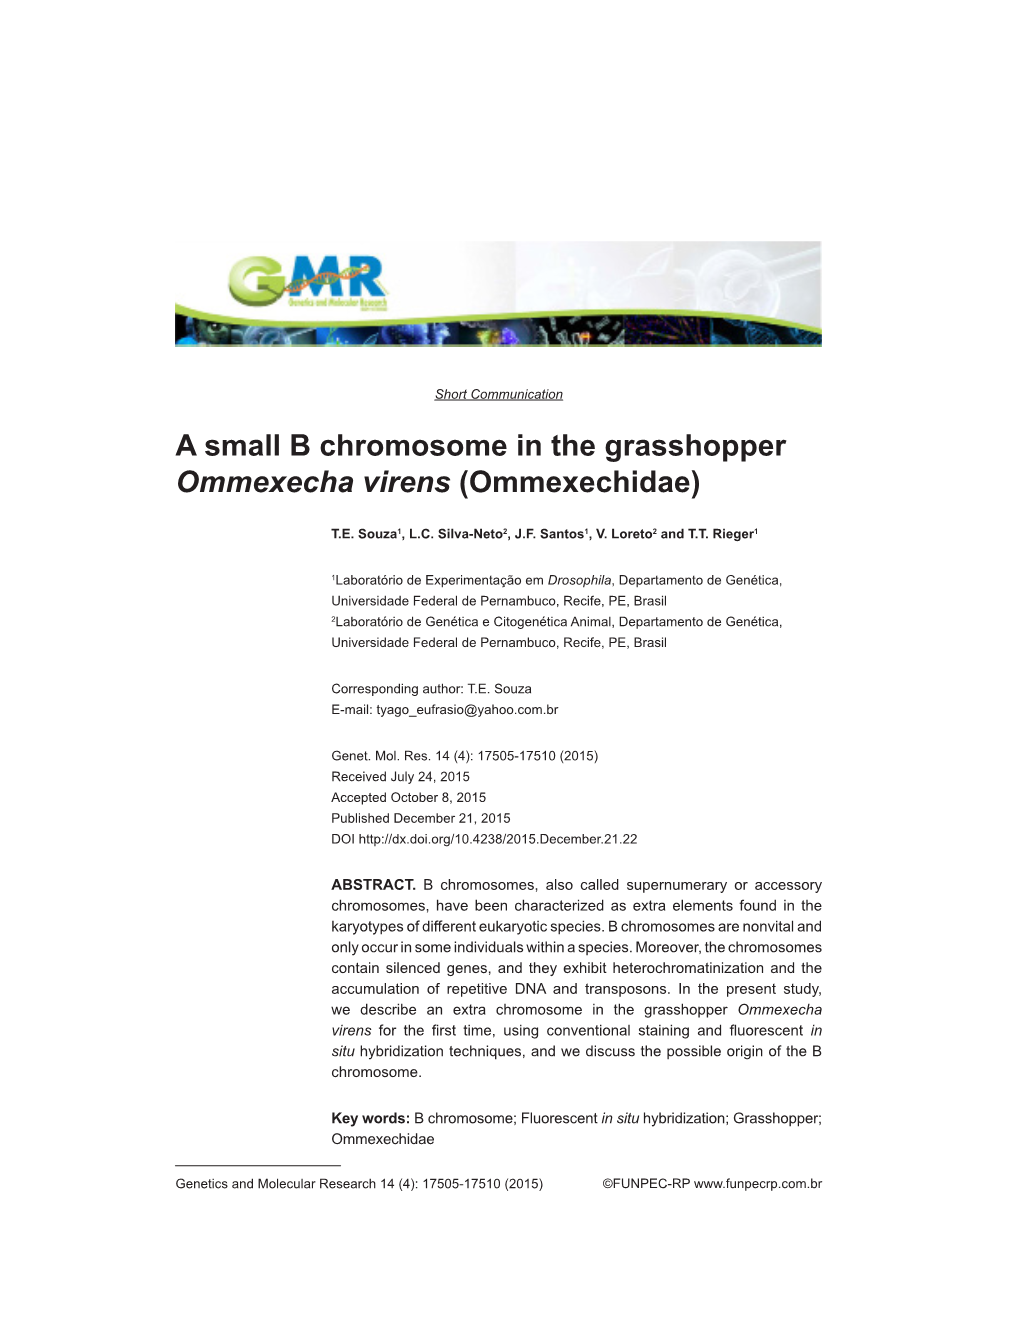 A Small B Chromosome in the Grasshopper Ommexecha Virens (Ommexechidae)